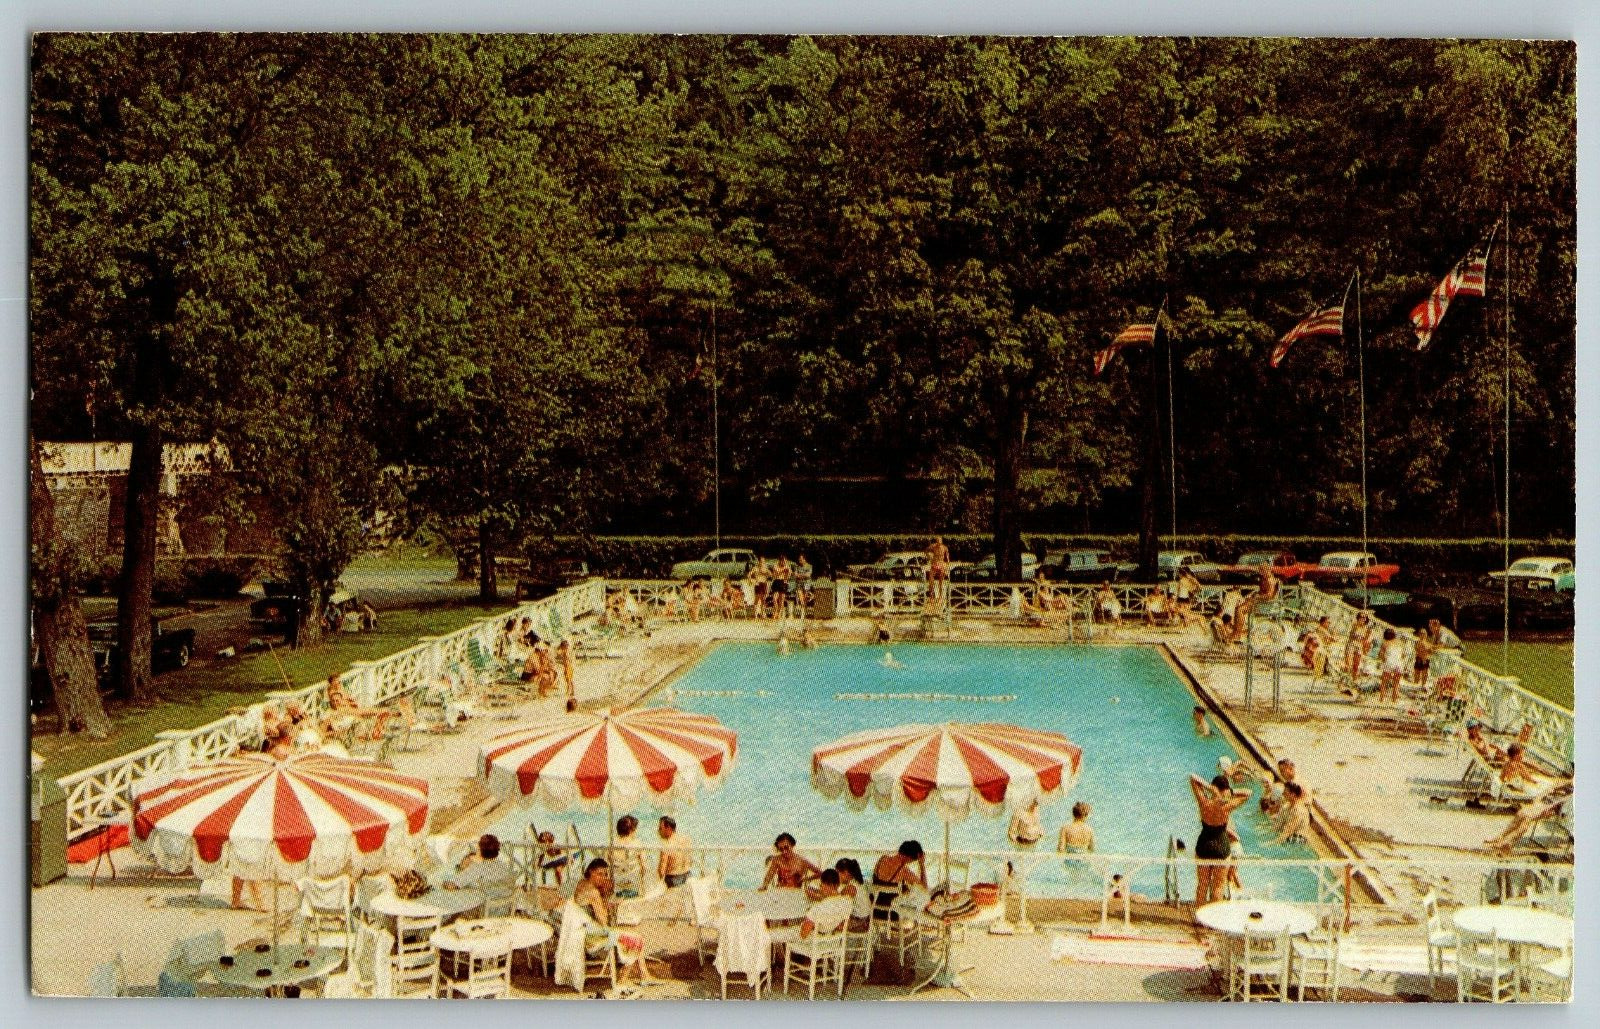 Bedford, Pennsylvania - Bedford Springs Hotel - Vintage Postcard - Posted